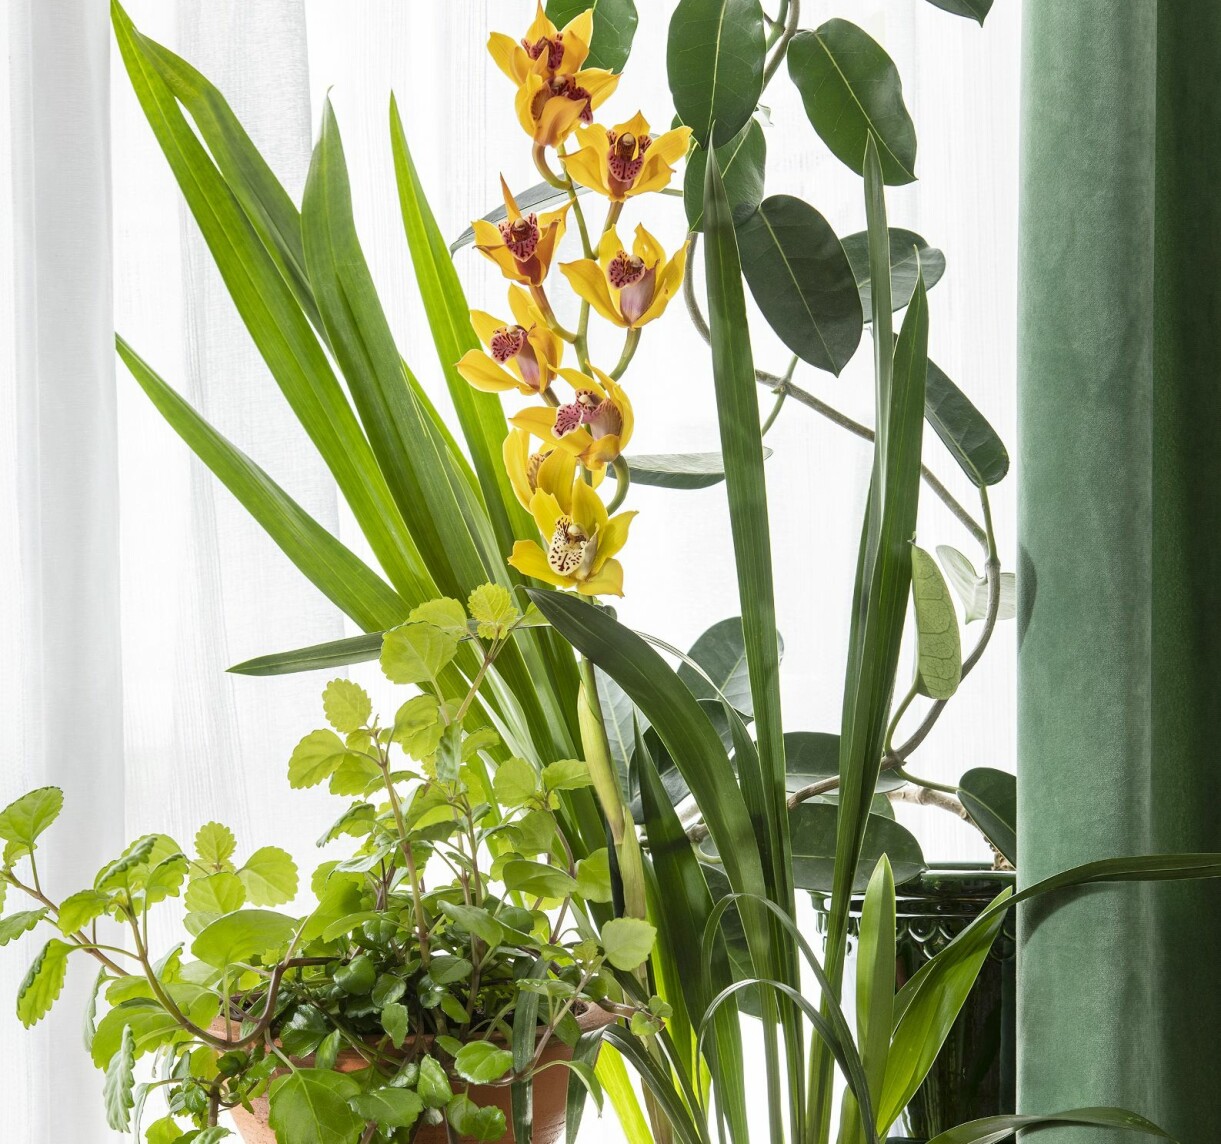 Reslig orkidé i kruka.